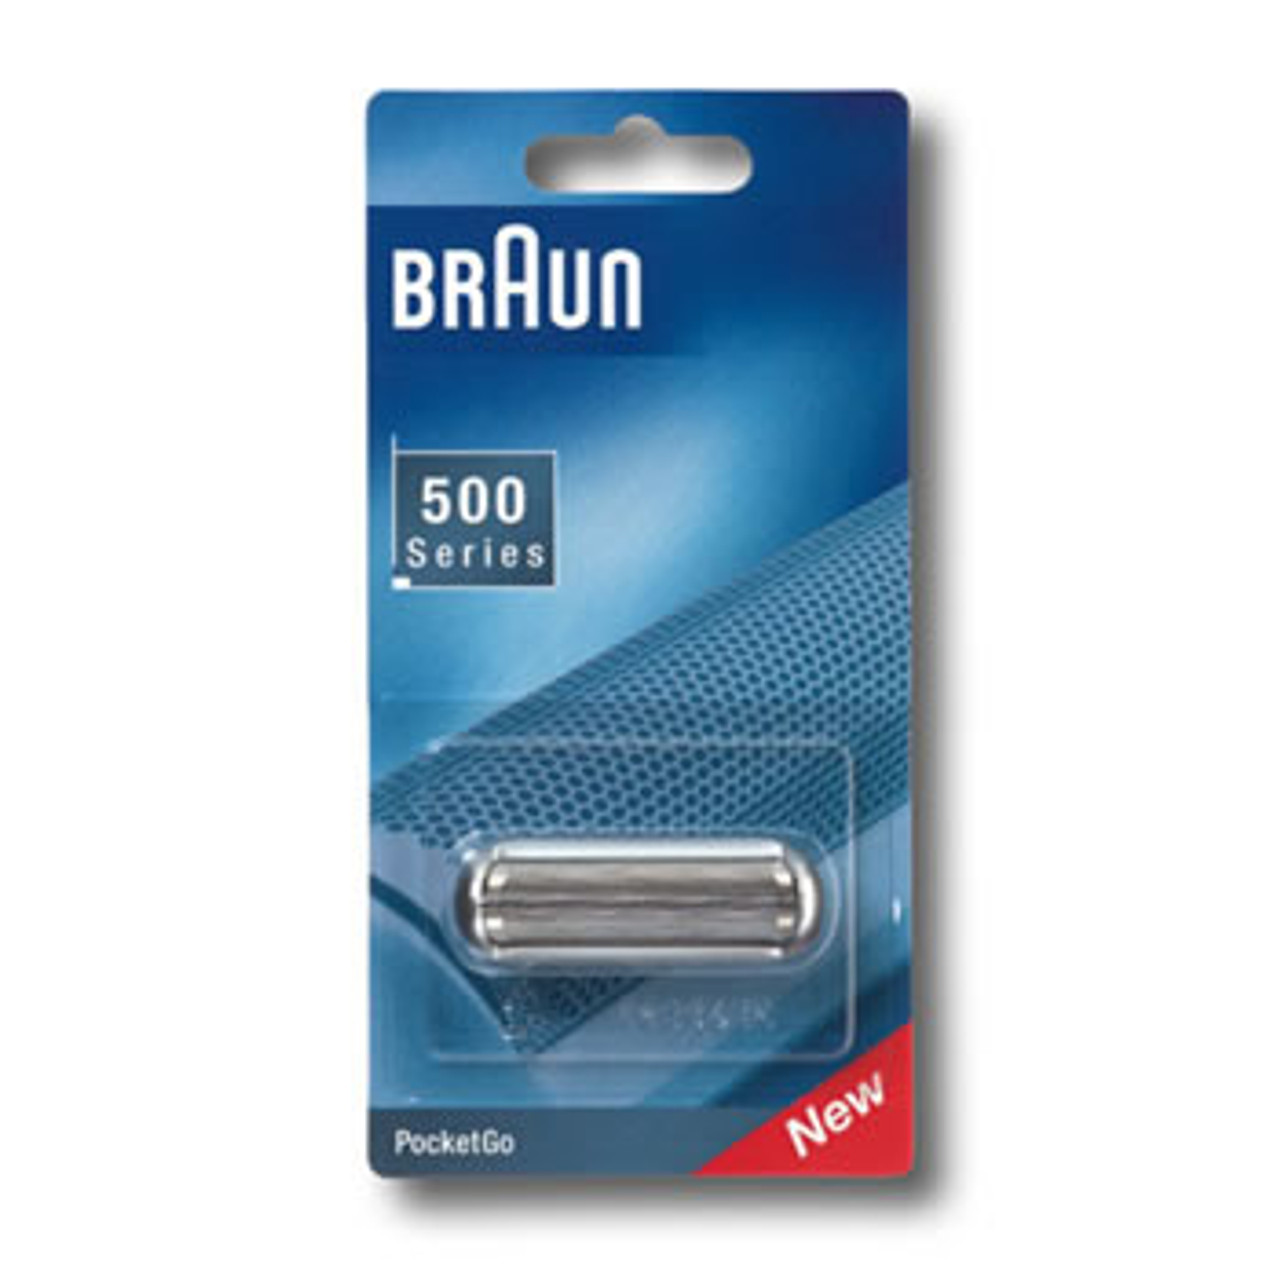 Braun PocketGo Replacement foil For Braun PocketGo shaver Types 5607 5609 Models M60, M-60B, P-70, P-80, P-90, M-90 Only!